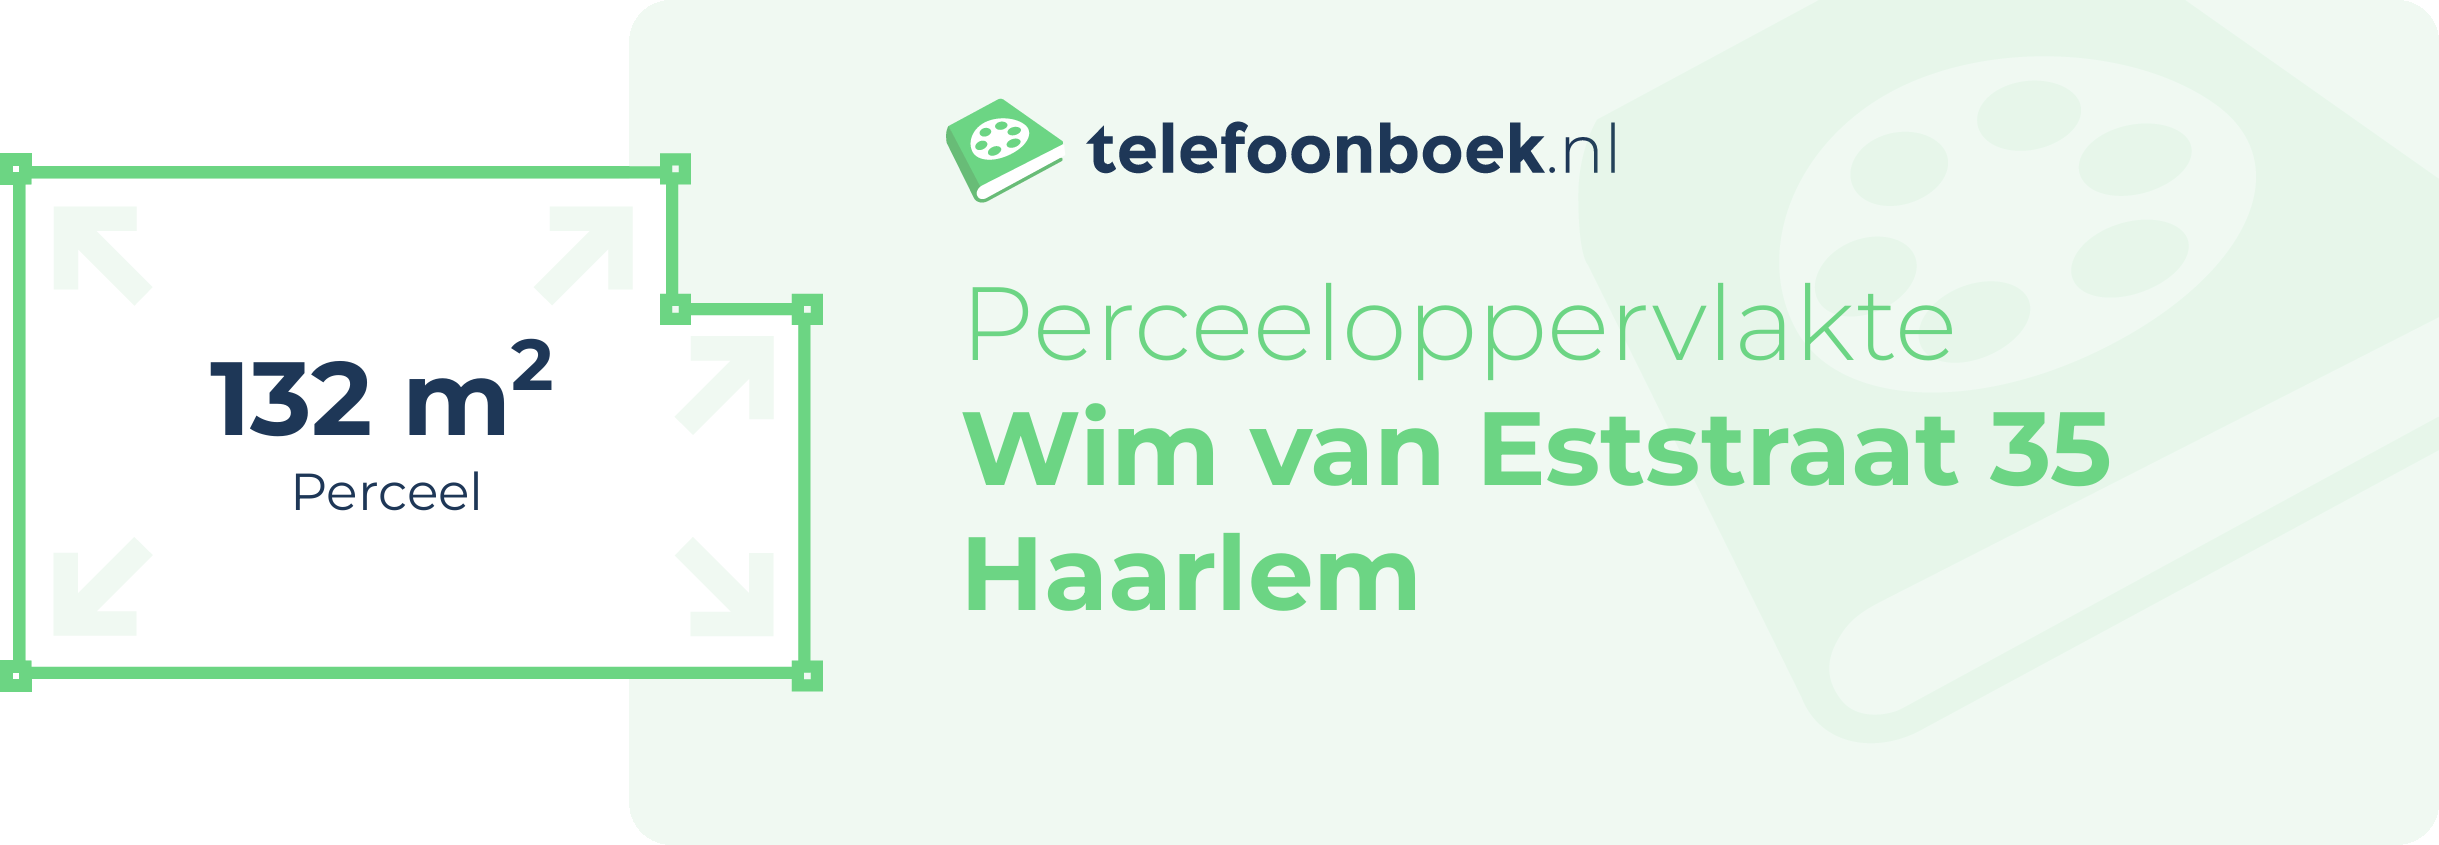 Perceeloppervlakte Wim Van Eststraat 35 Haarlem